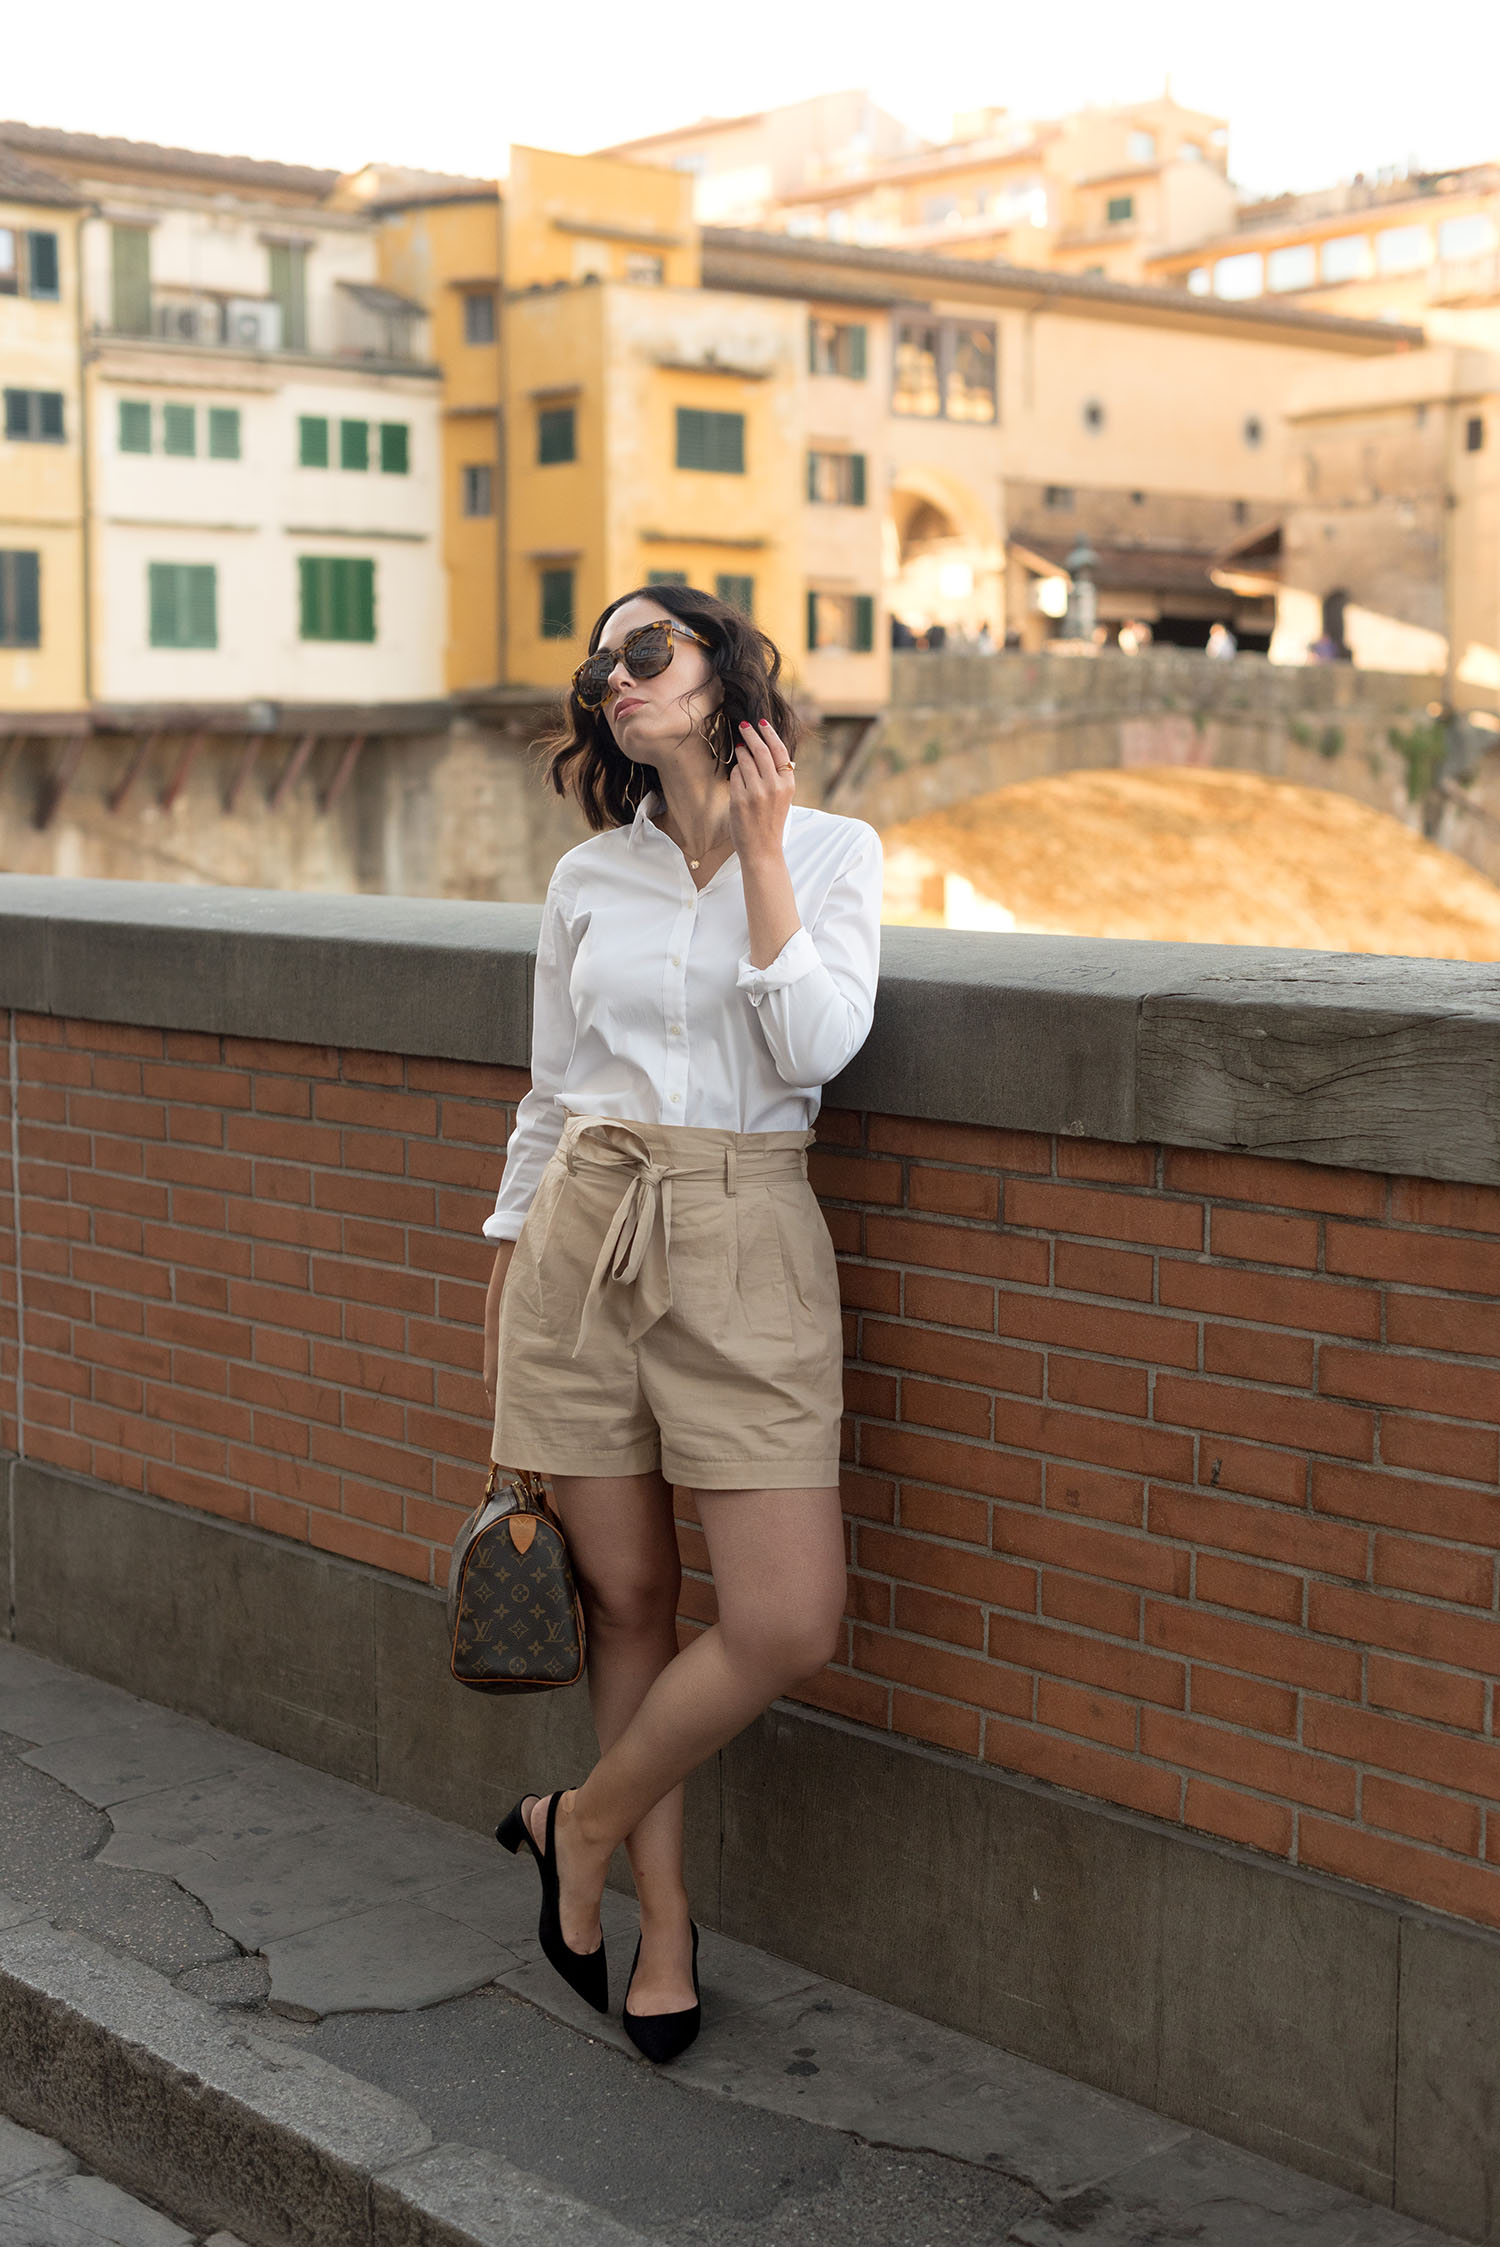 Top Winnipeg fashion blogger Cee Fardoe of Coco & Vera in Florence, Italy, wearing a Uniqlo white blouse and Mango pumps